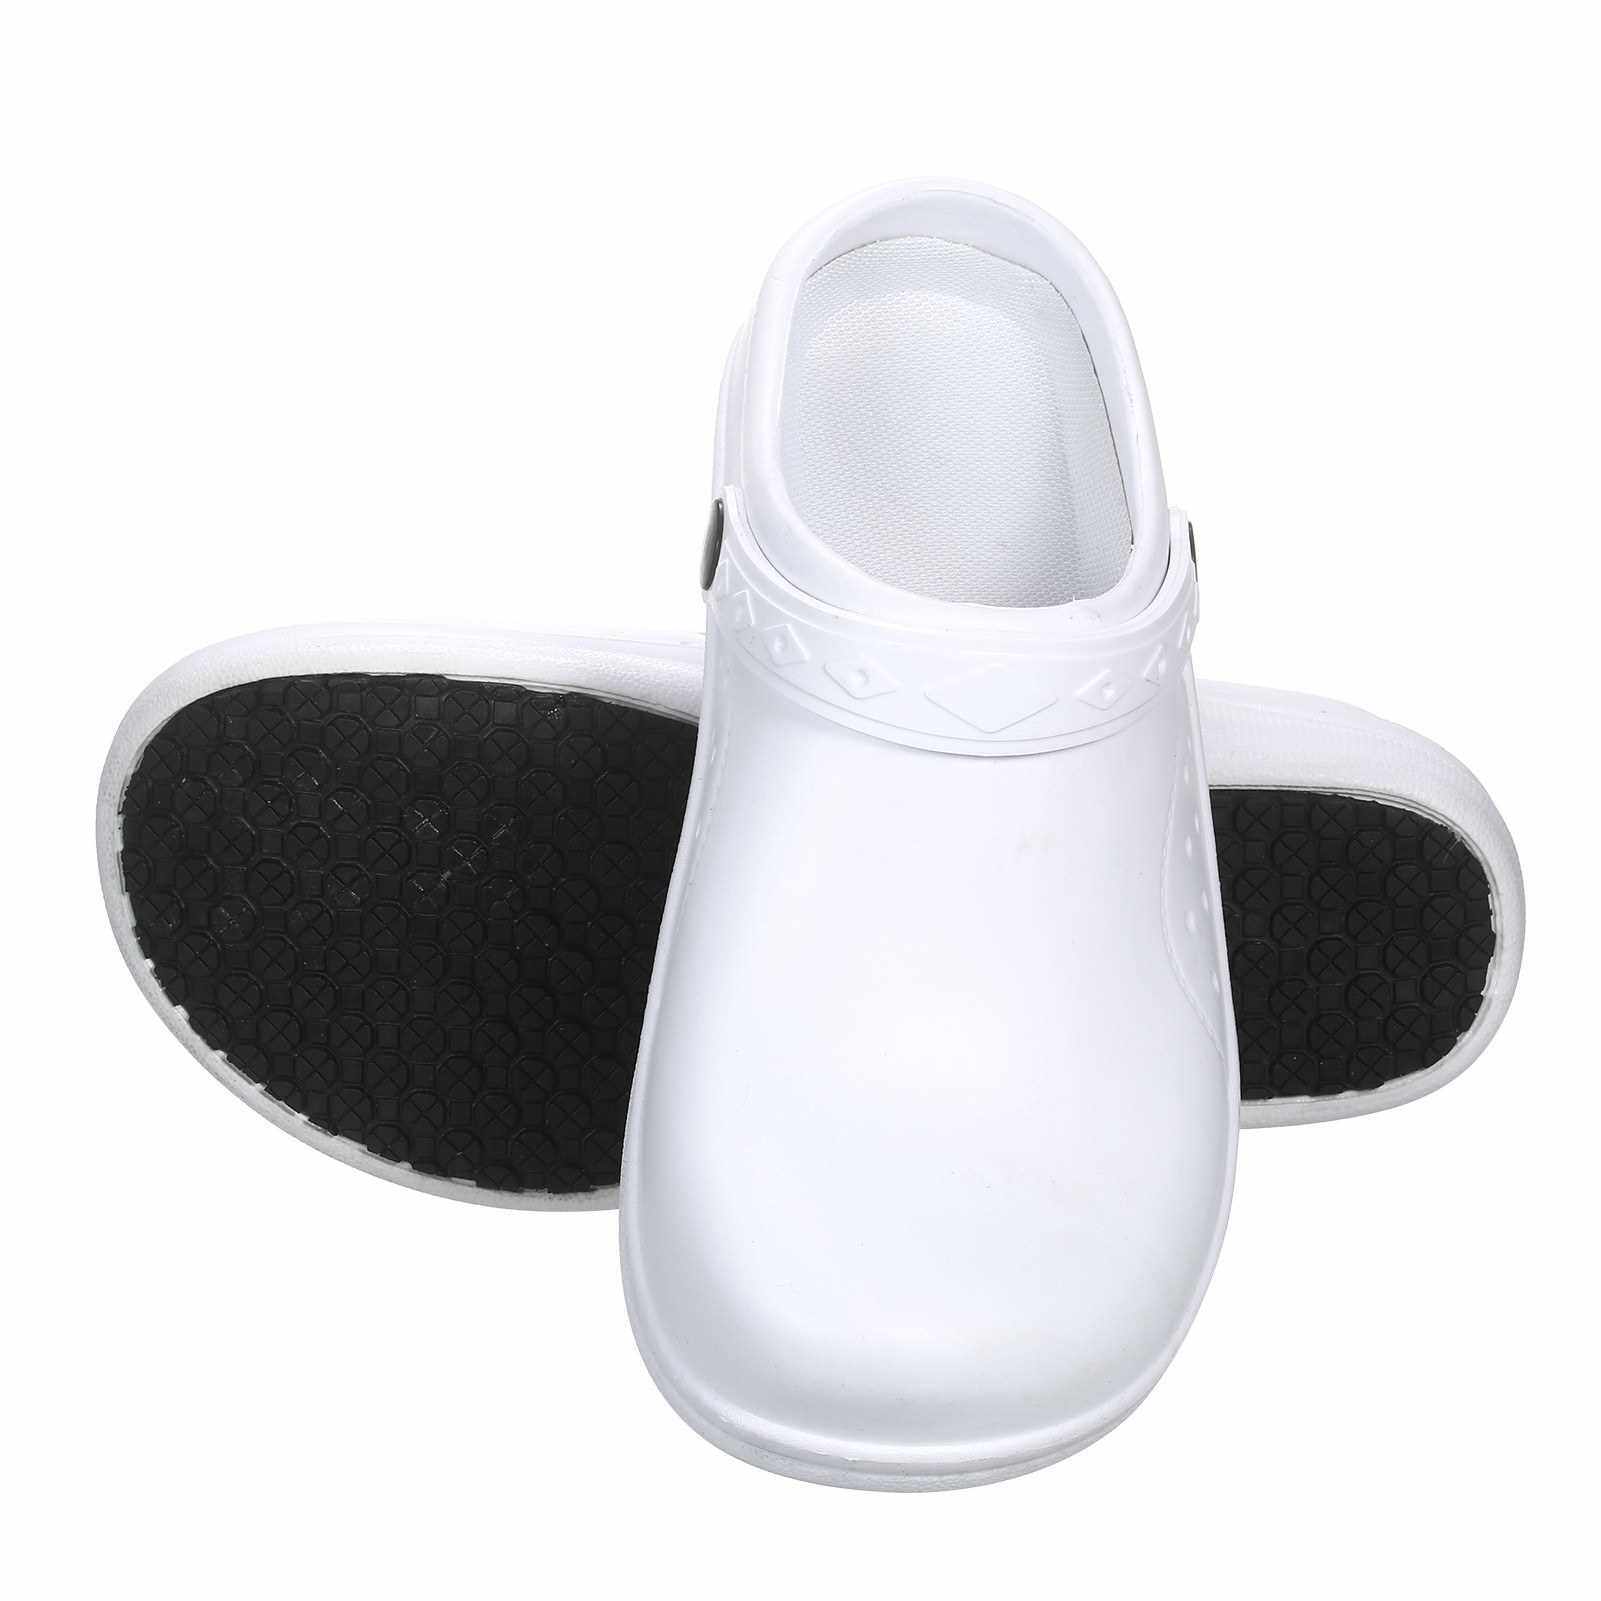 Unisex Garden Clogs Waterproof & Lightweight EVA Shoes Anti-slip Nursing Slippers Women or Men Sandals for Homelife Work (Black)